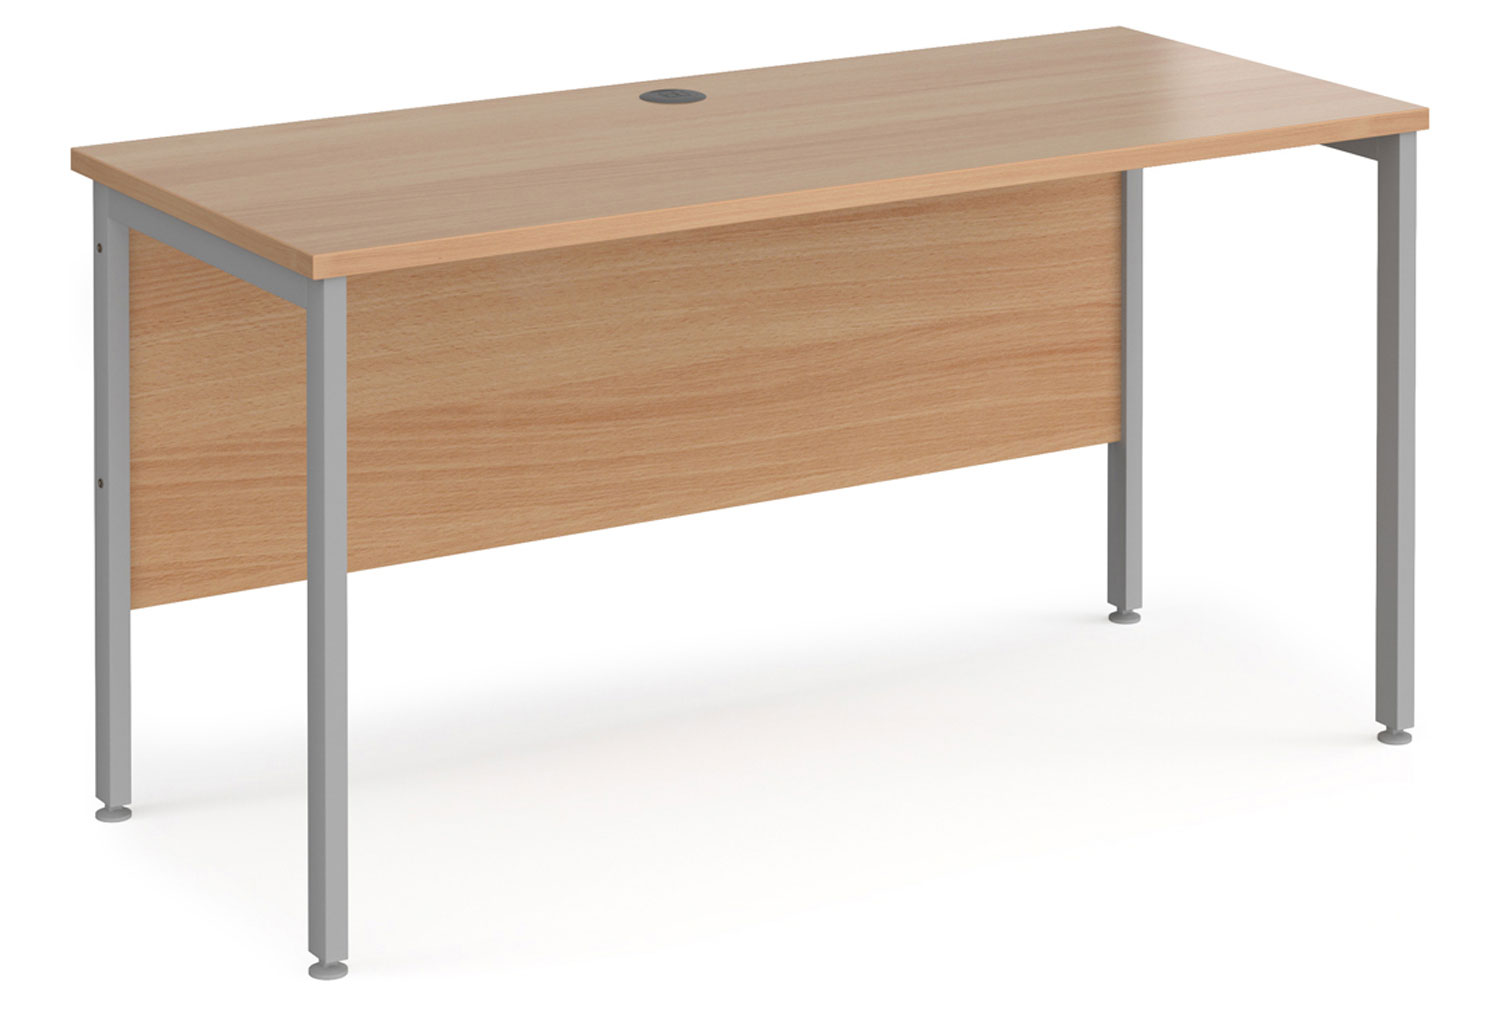 Value Line Deluxe H-Leg Narrow Rectangular Office Desk (Silver Legs), 140wx60dx73h (cm), Beech, Express Delivery